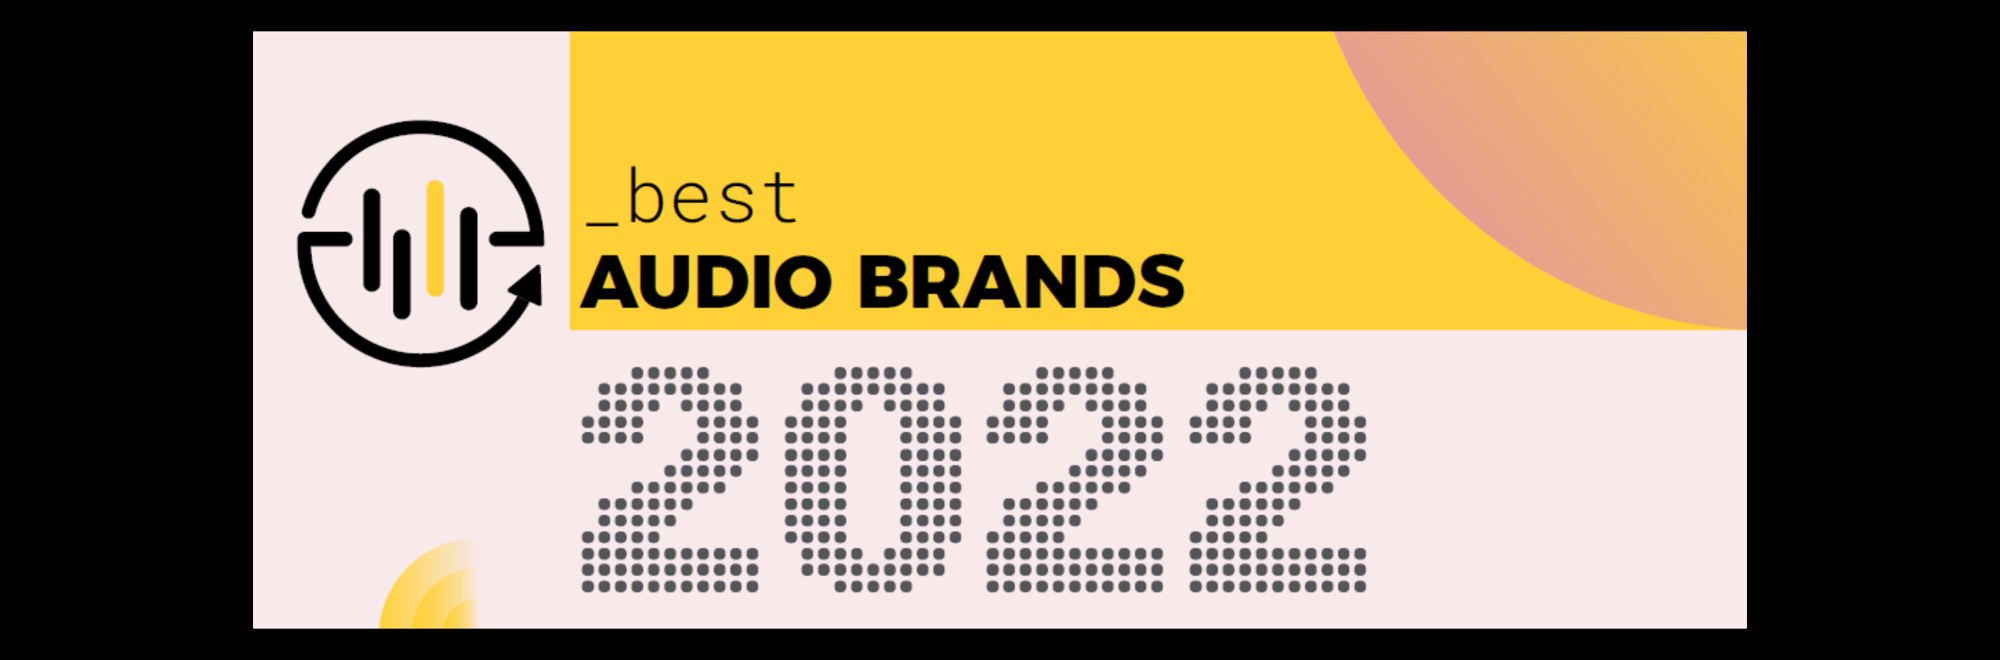 Best Audio Brands 2022: Sonic branding agency Amp reveals the power of music for marketing